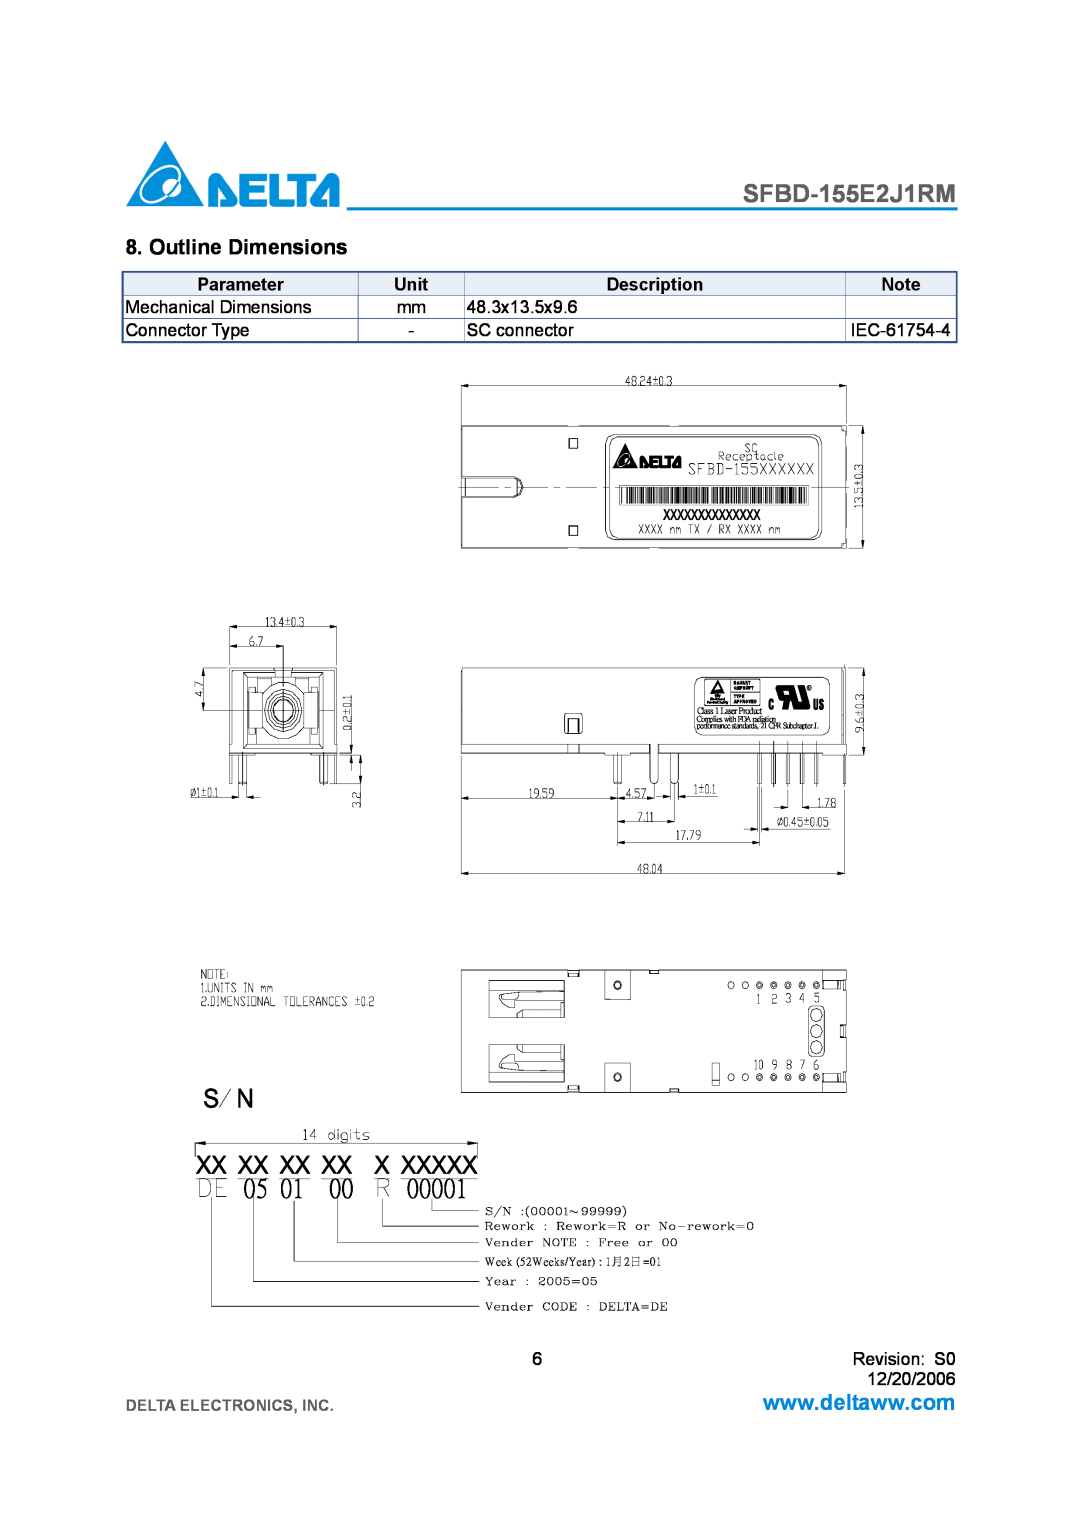 Delta Electronics SFBD-155E2J1RM manual Outline Dimensions, Parameter, Unit, Description, Delta Electronics, Inc, perf 